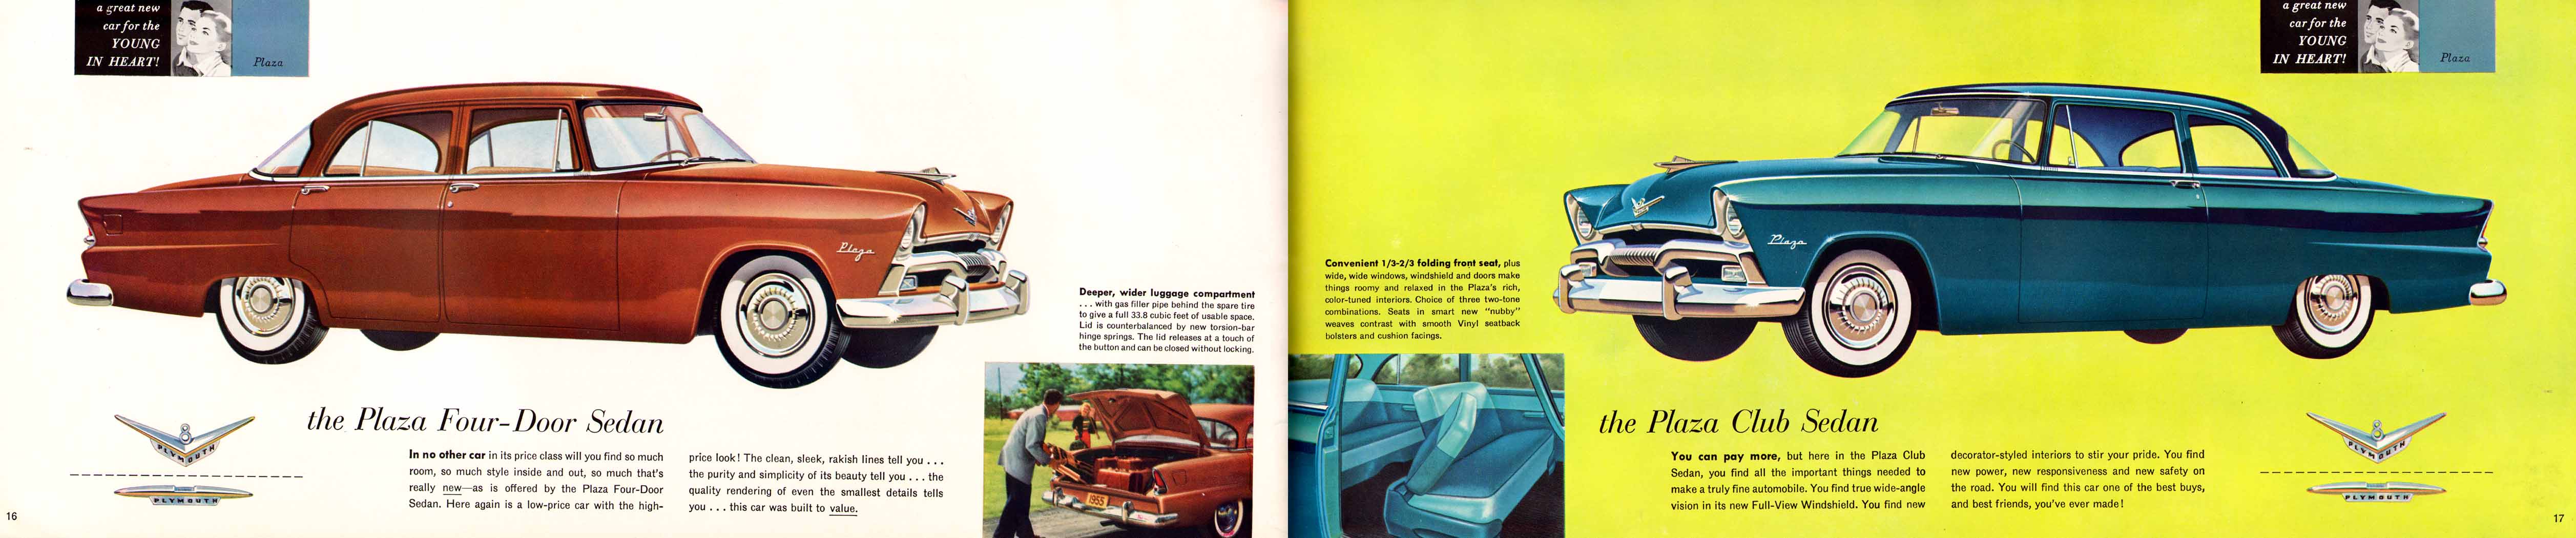 1955 Plymouth Prestige-16-17